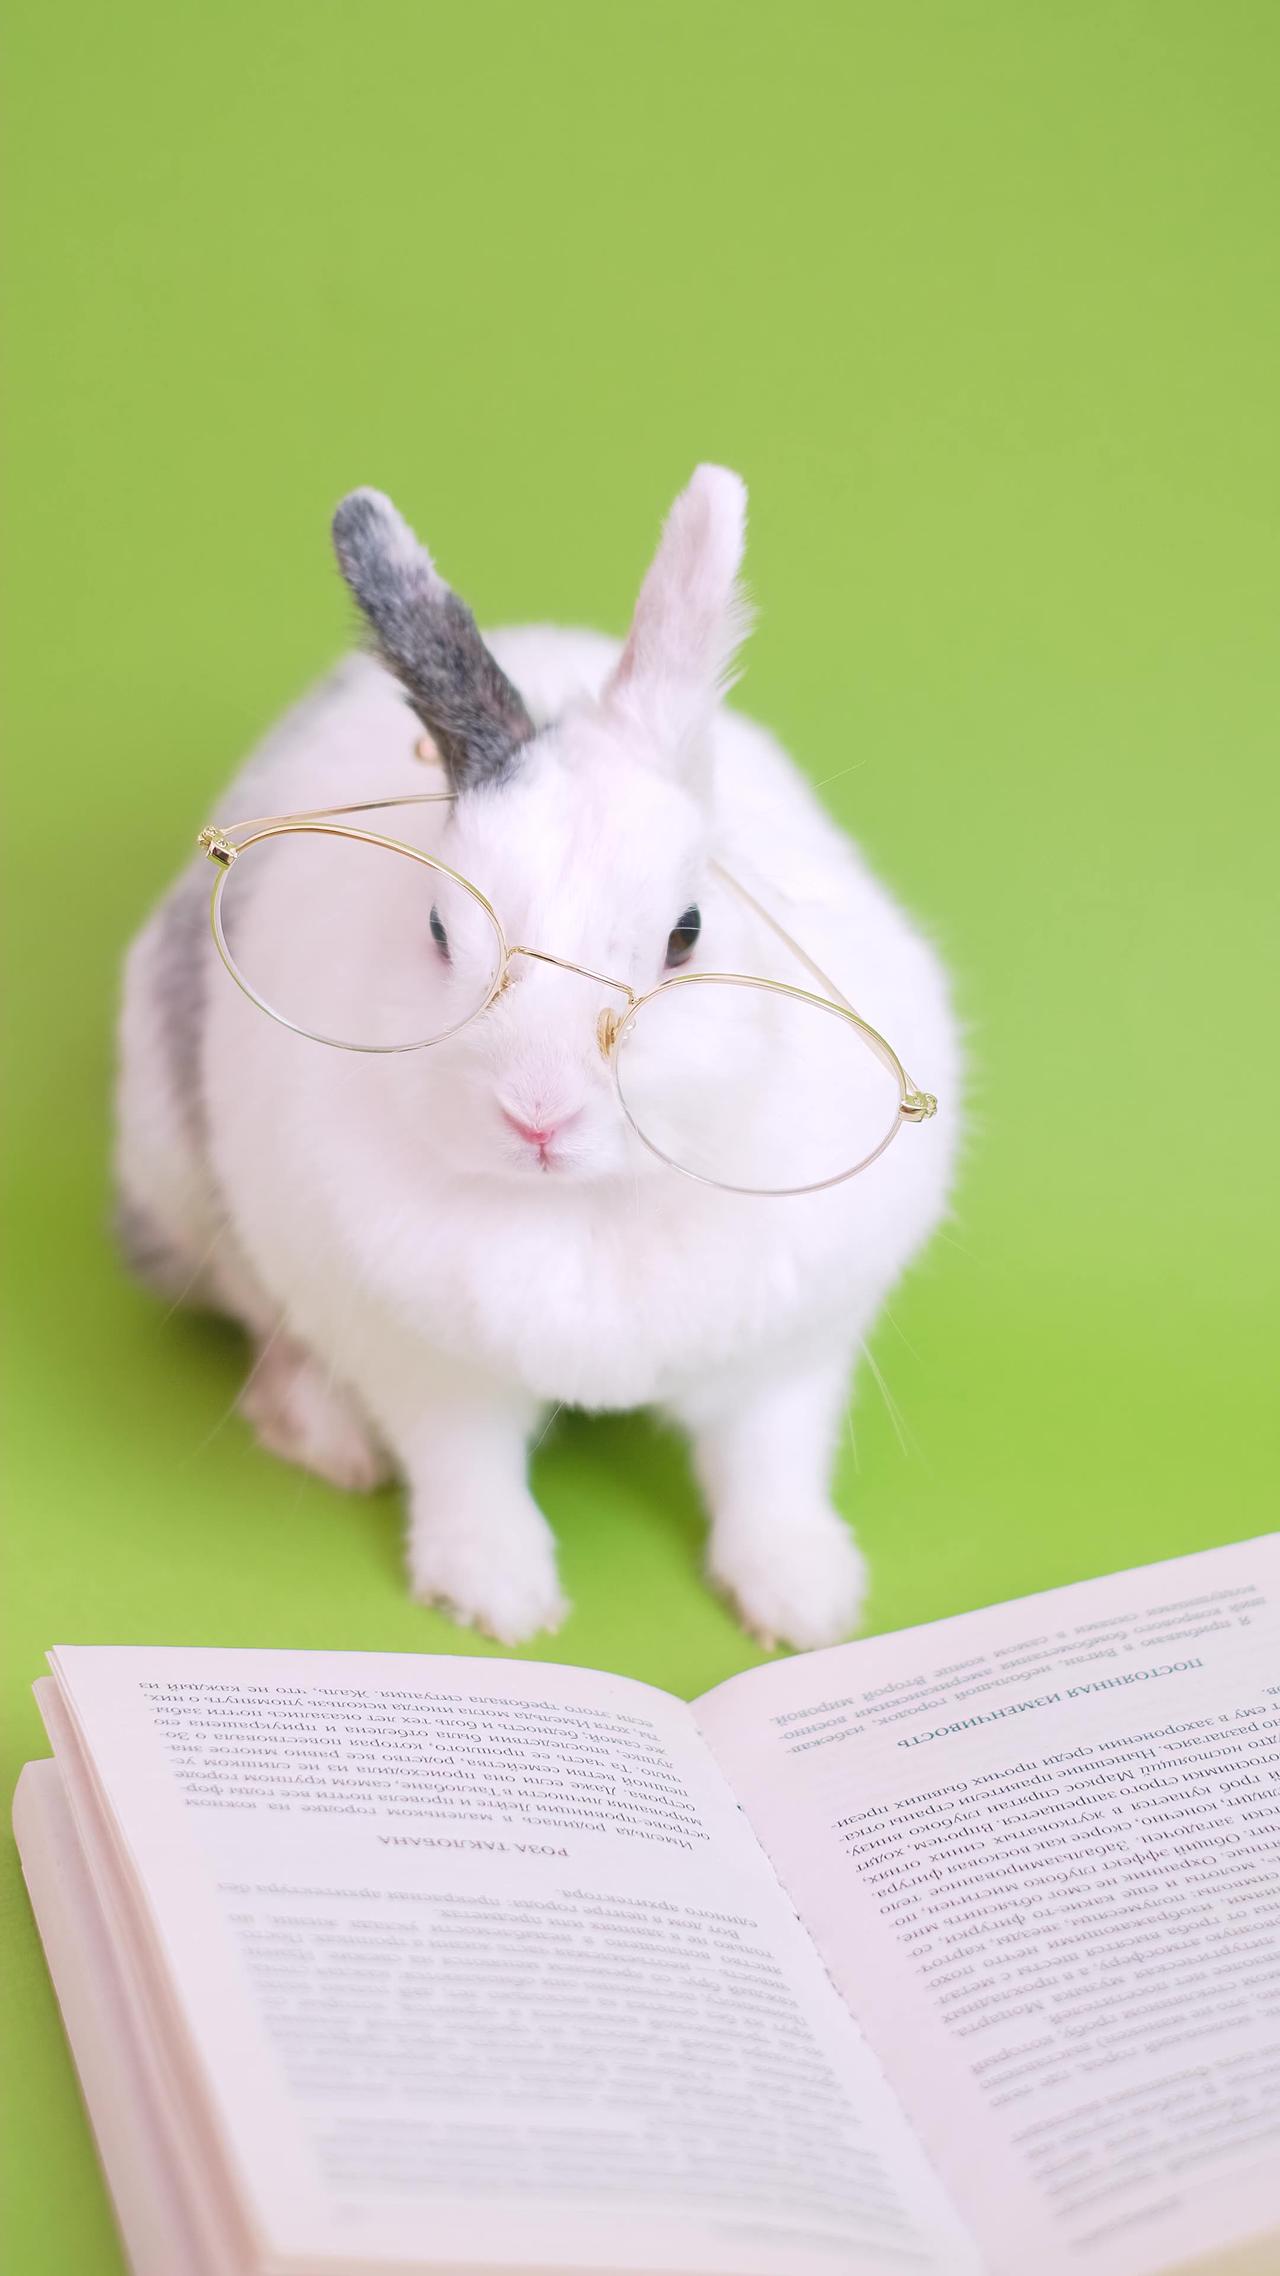 Cute Bunny With Eyeglasses